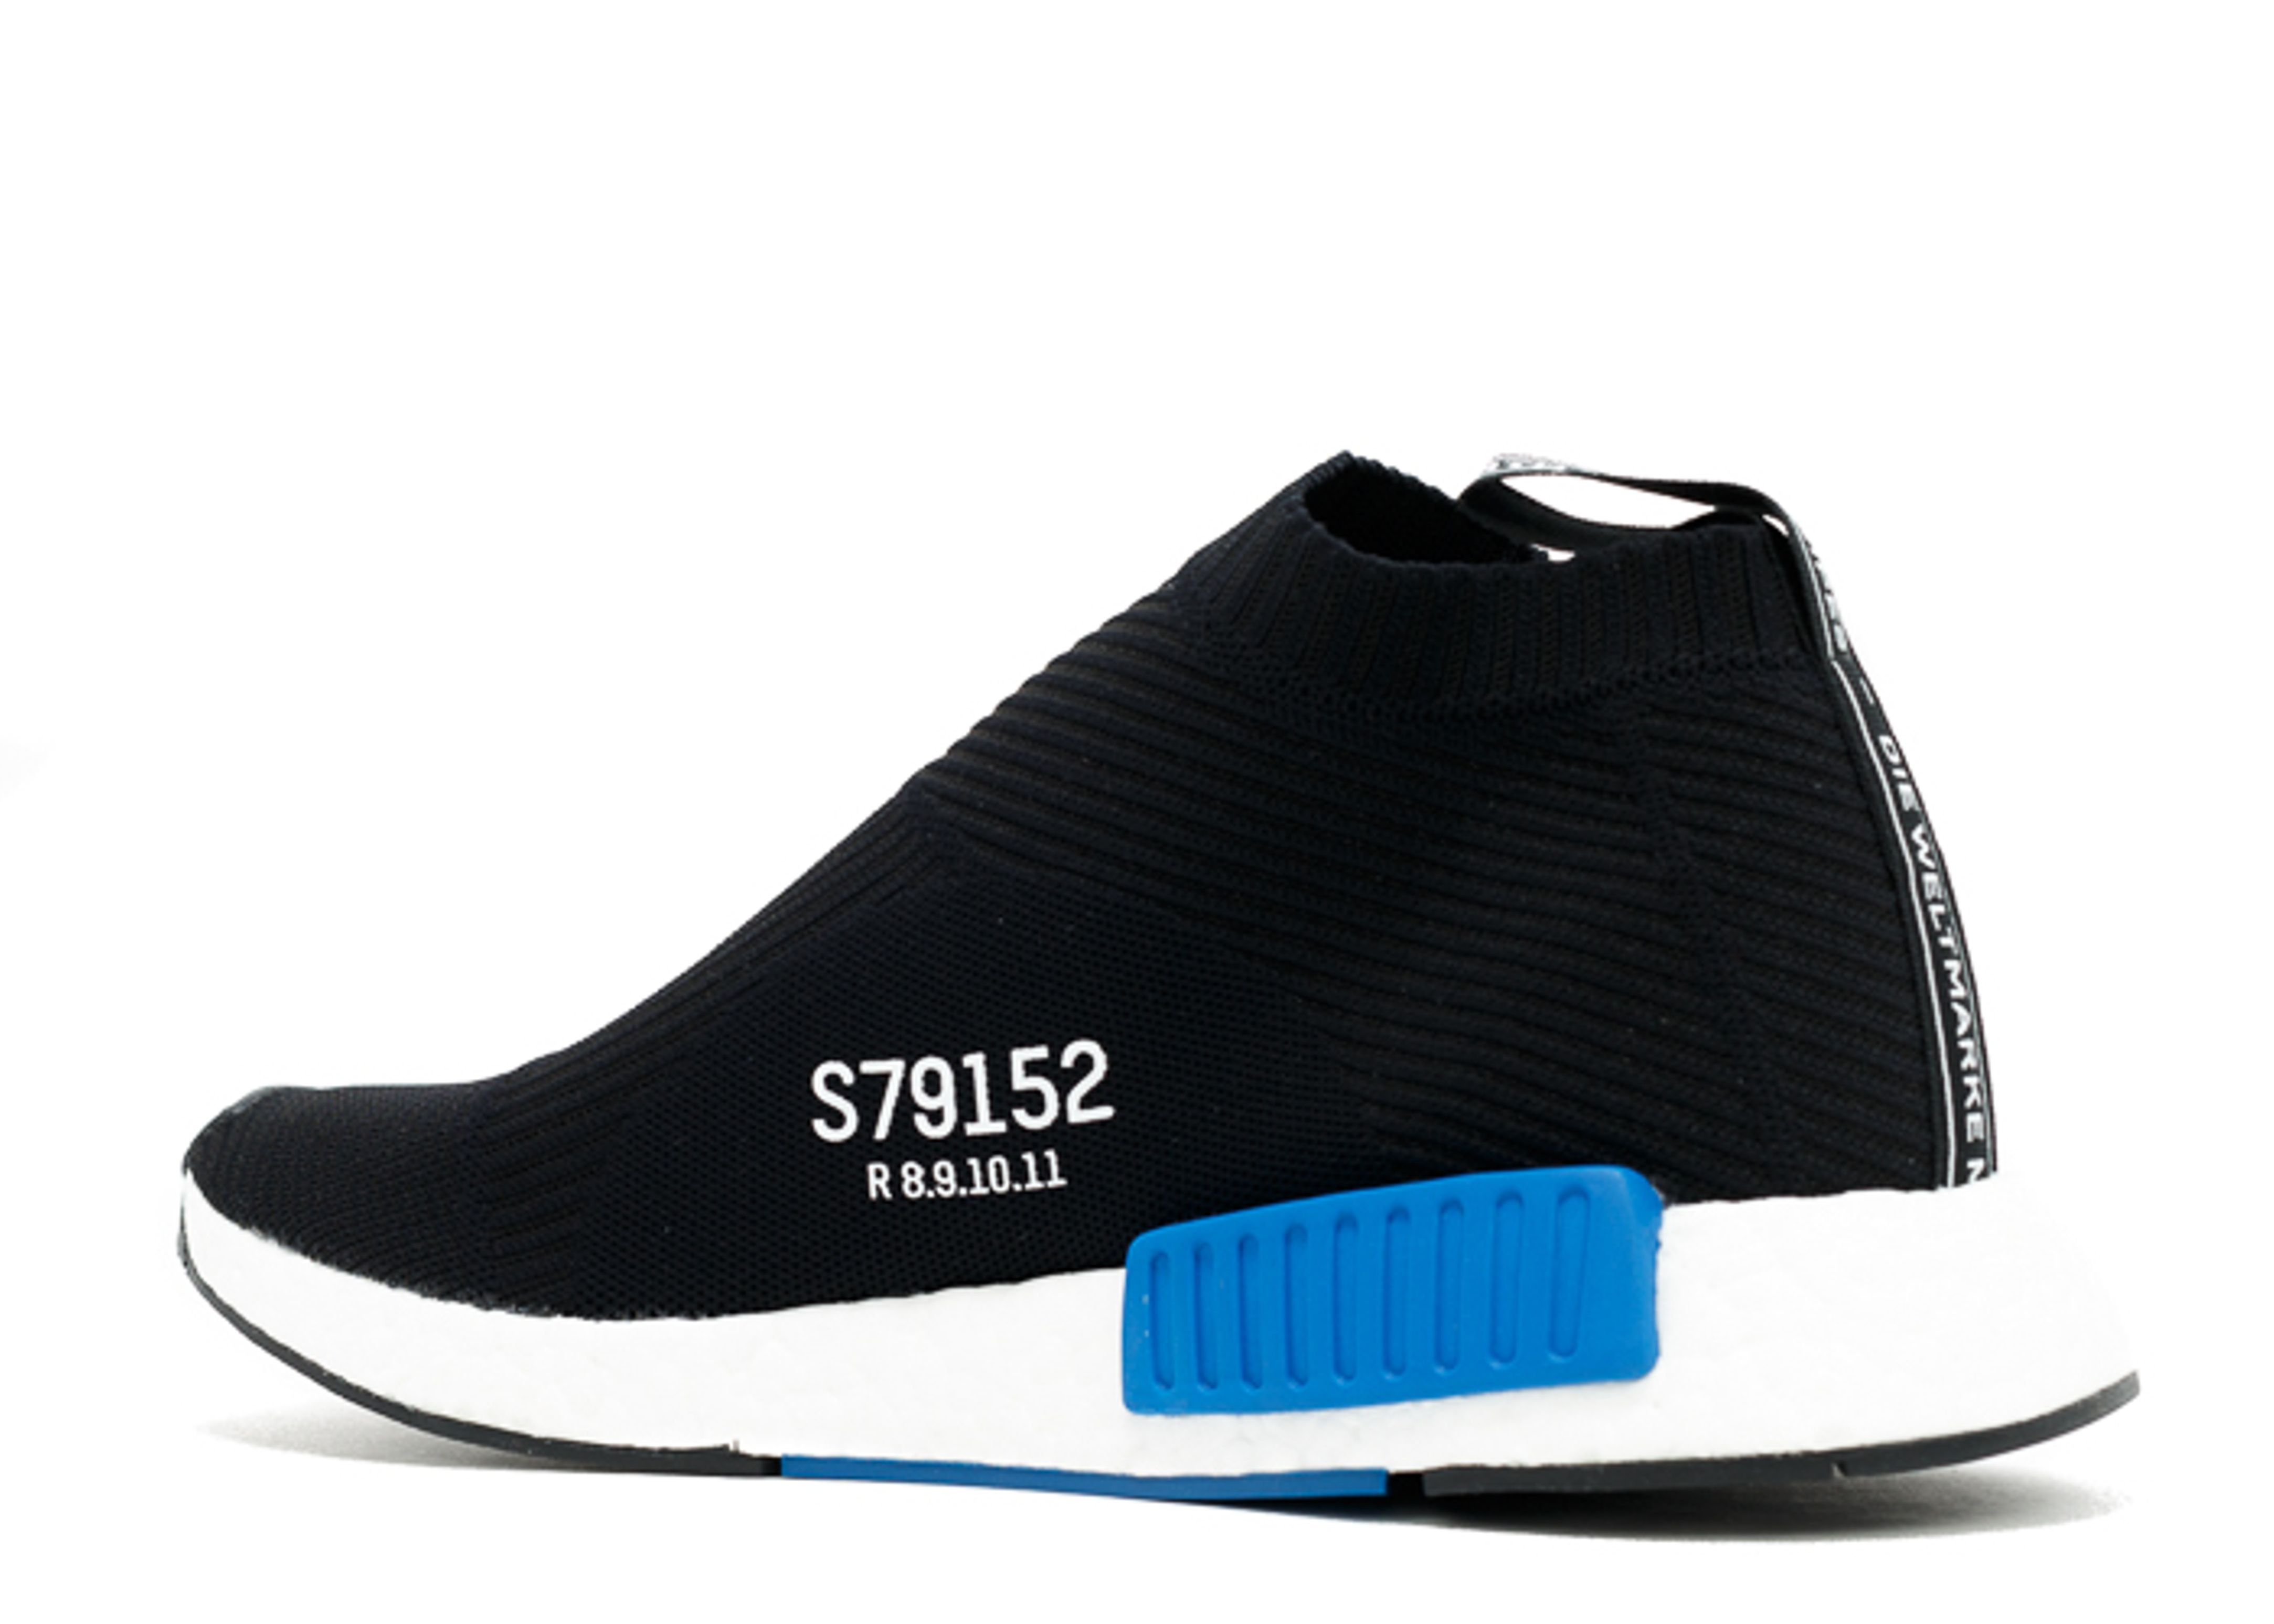 Adidas - S79152 - core black/blue/whitw 